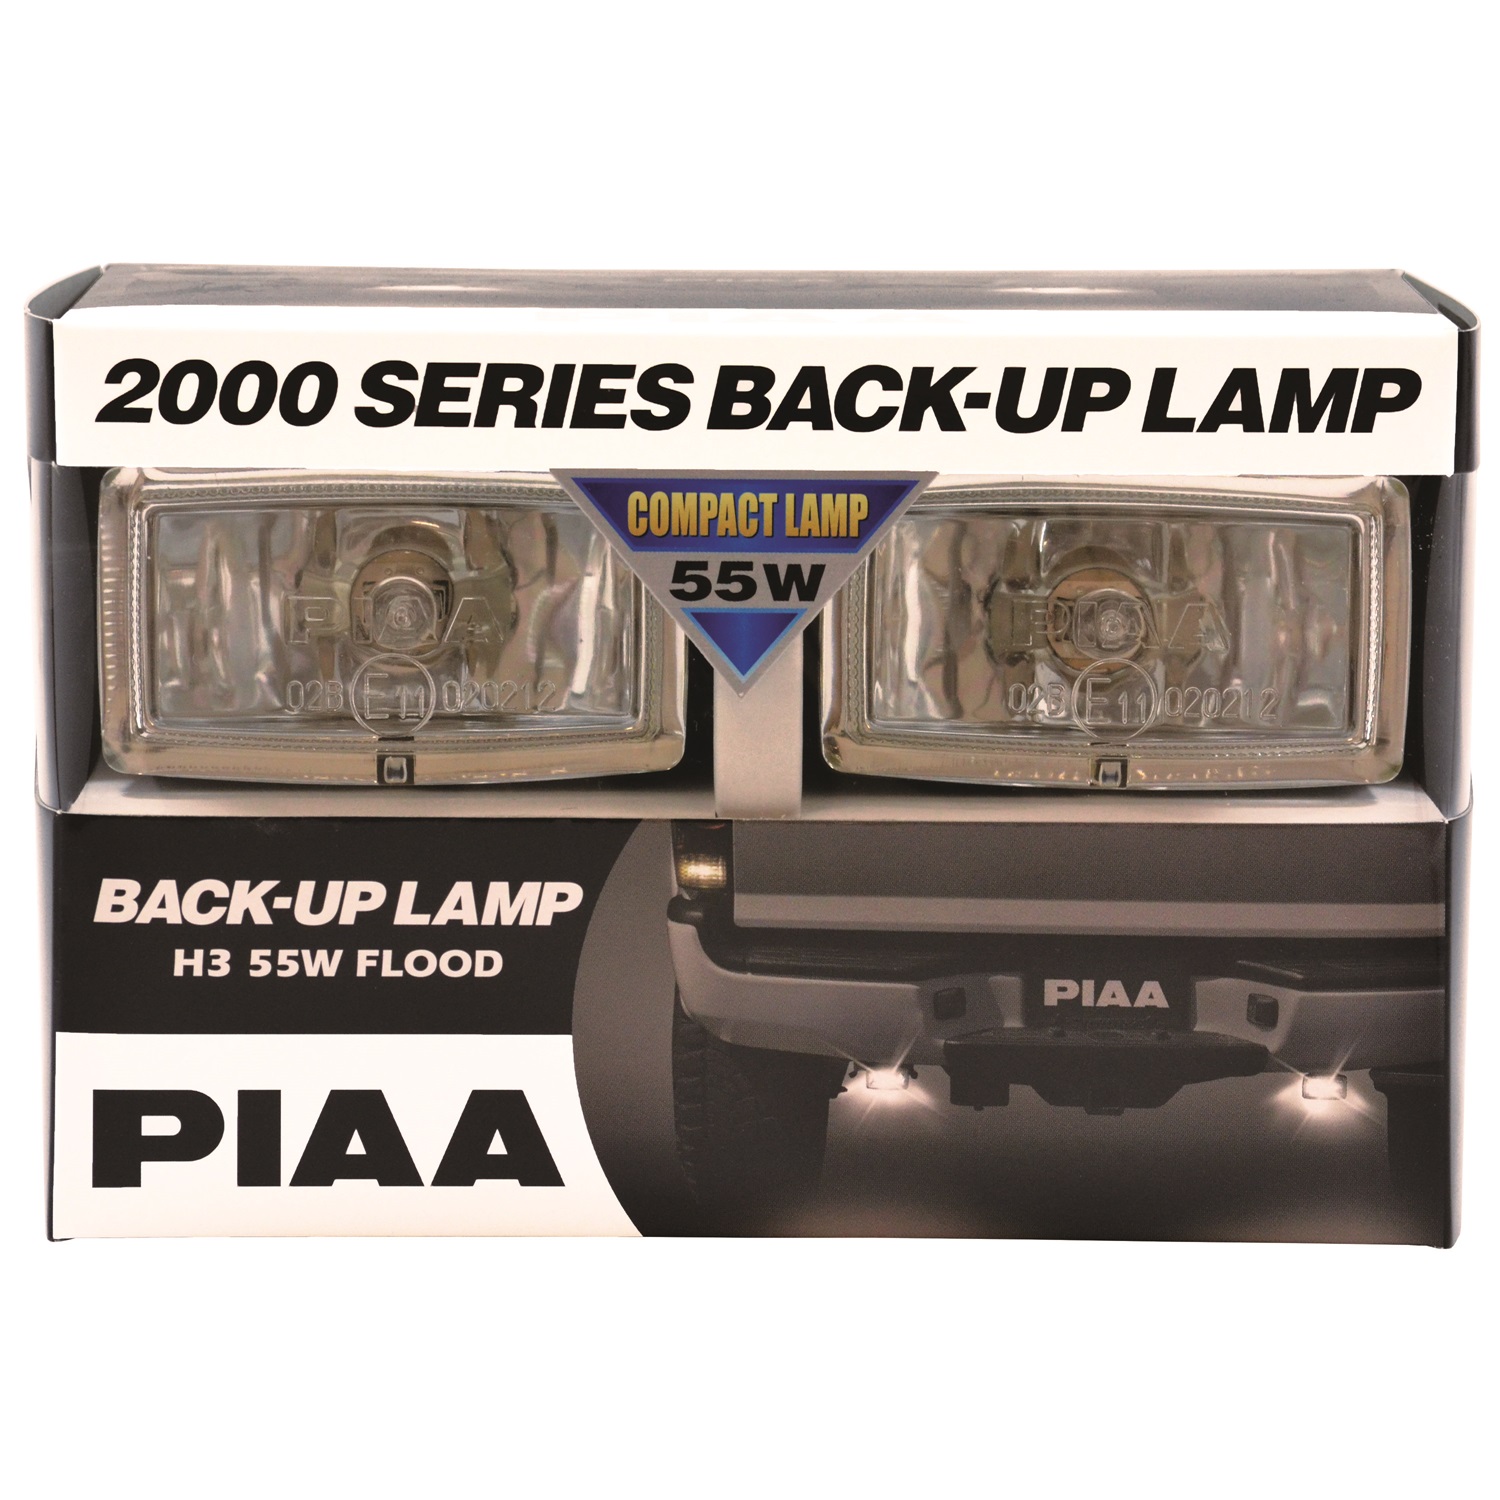 PIAA PIAA 2040 2000 Series; Flood Back Up Lamp Kit